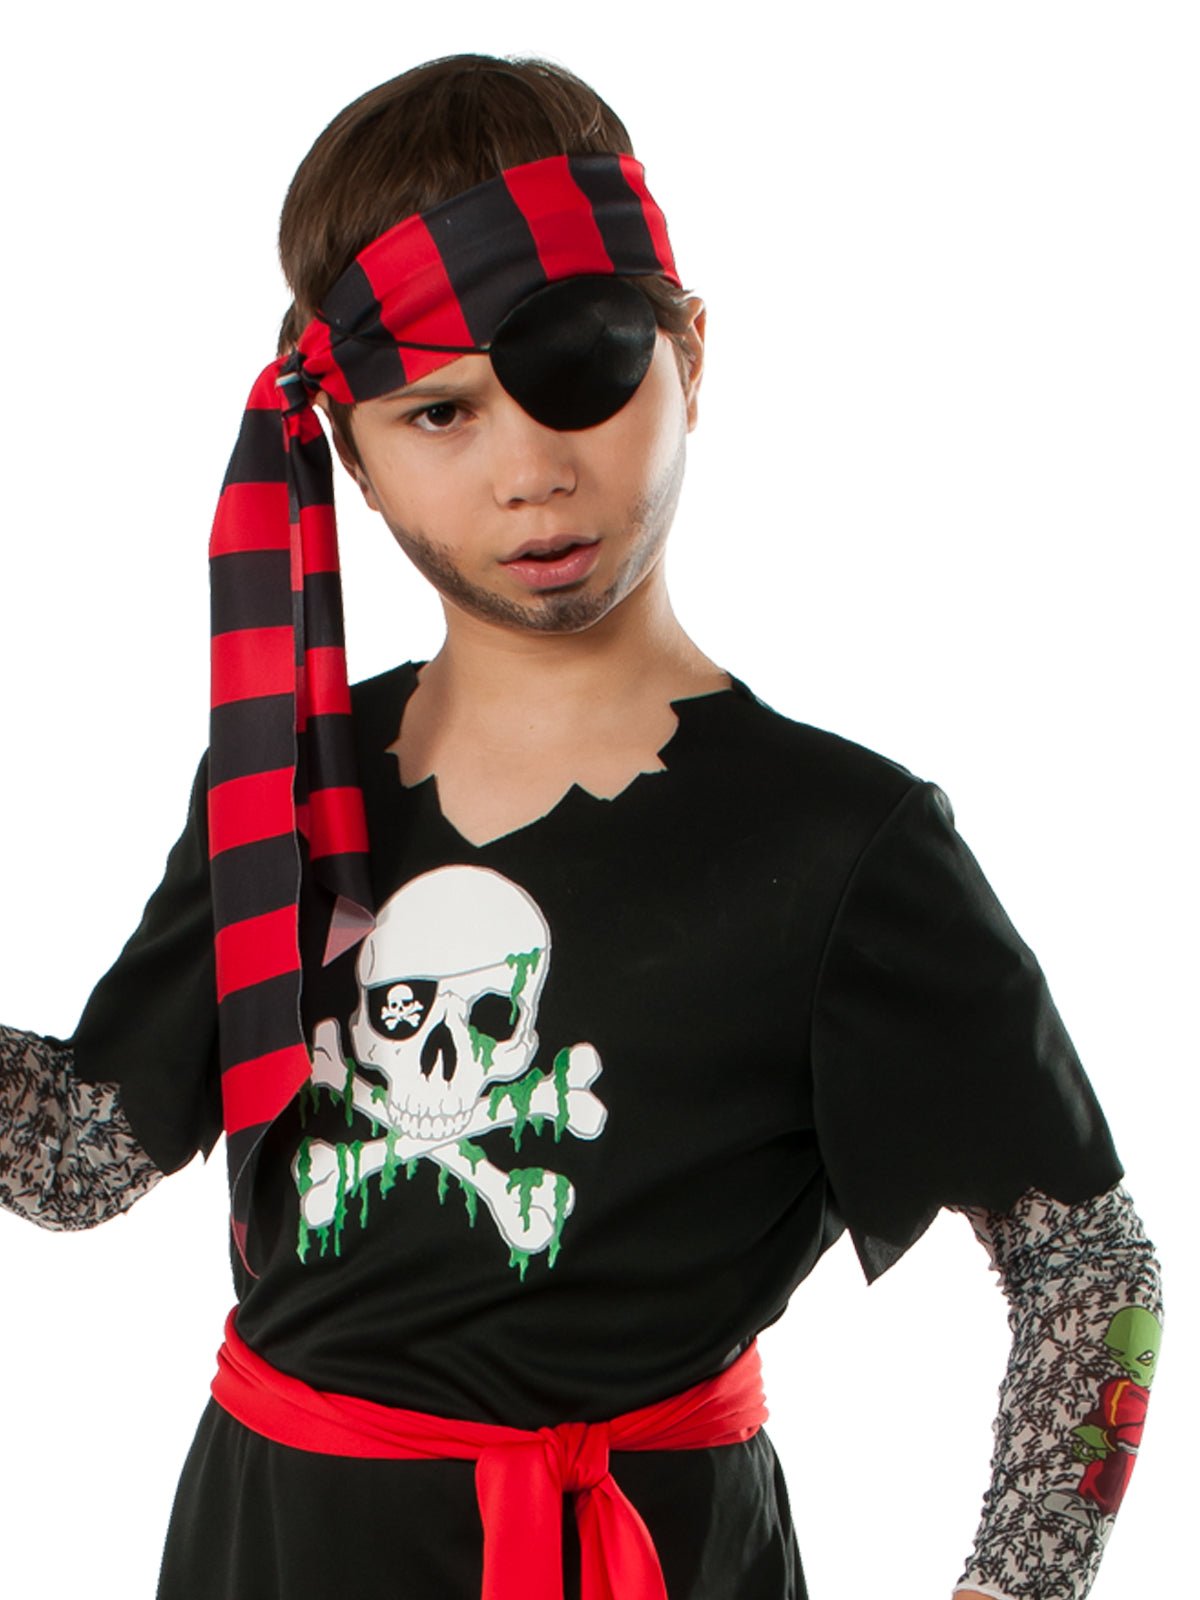 Tattooed Pirate Costume Kids